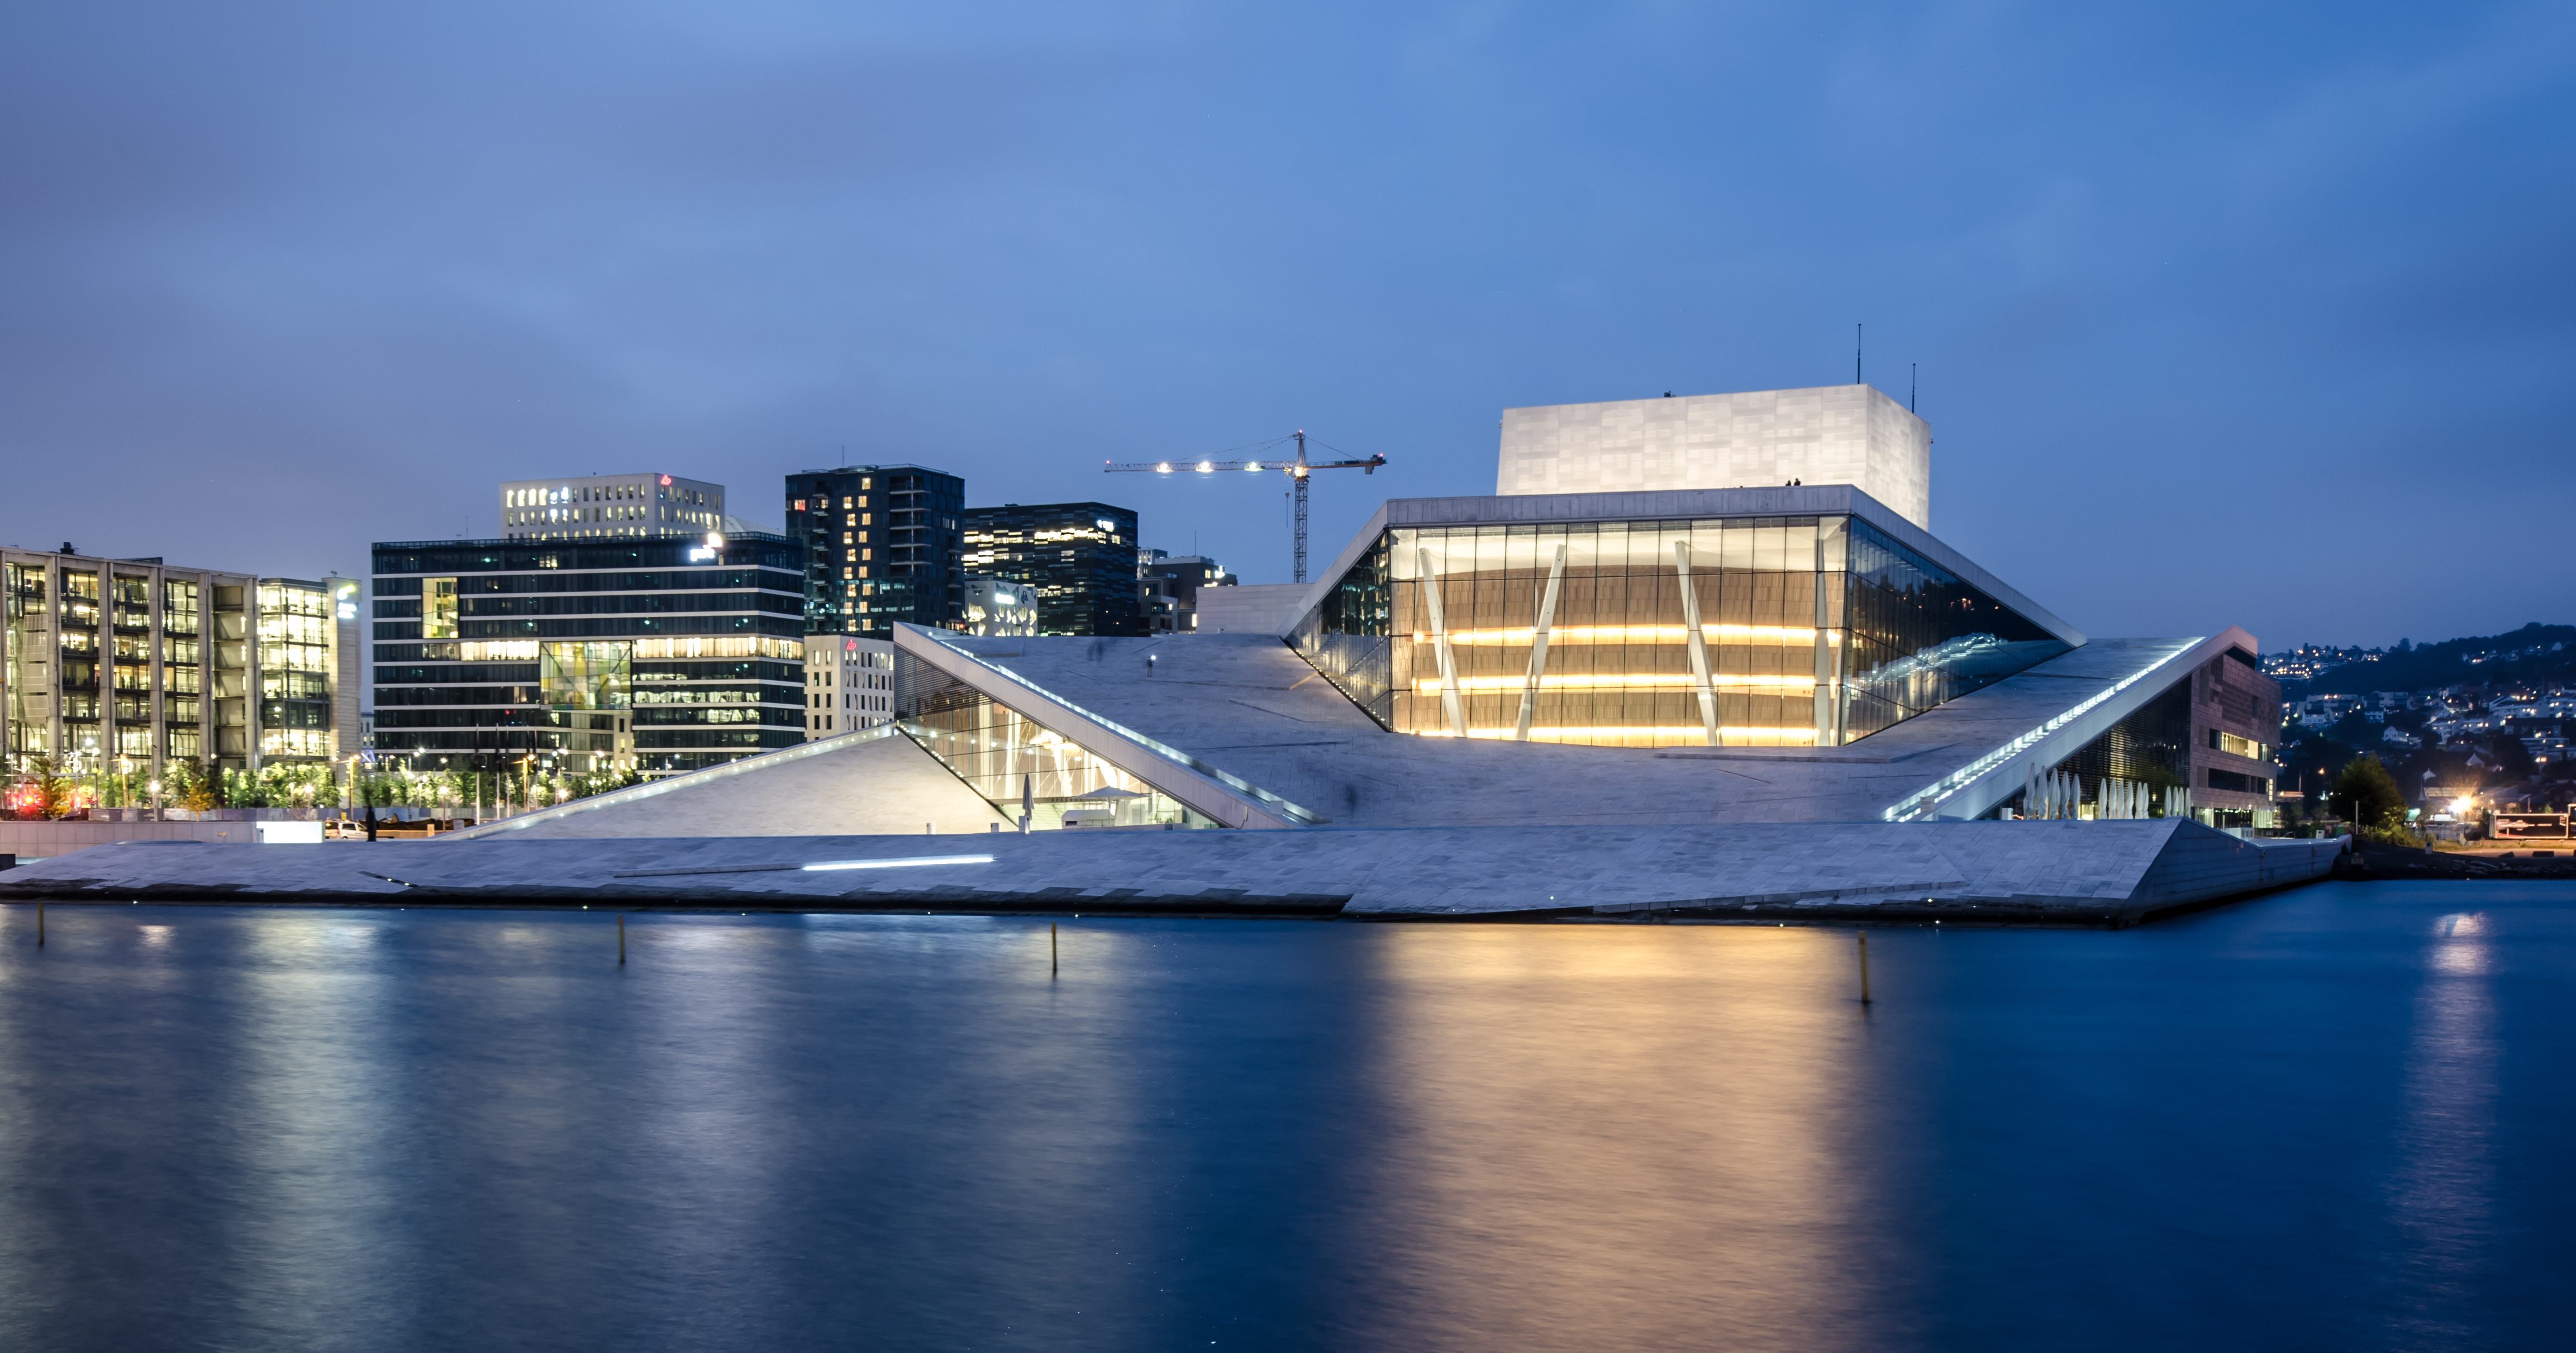 File:Oslo opera house (19612578563).jpg - Wikimedia Commons